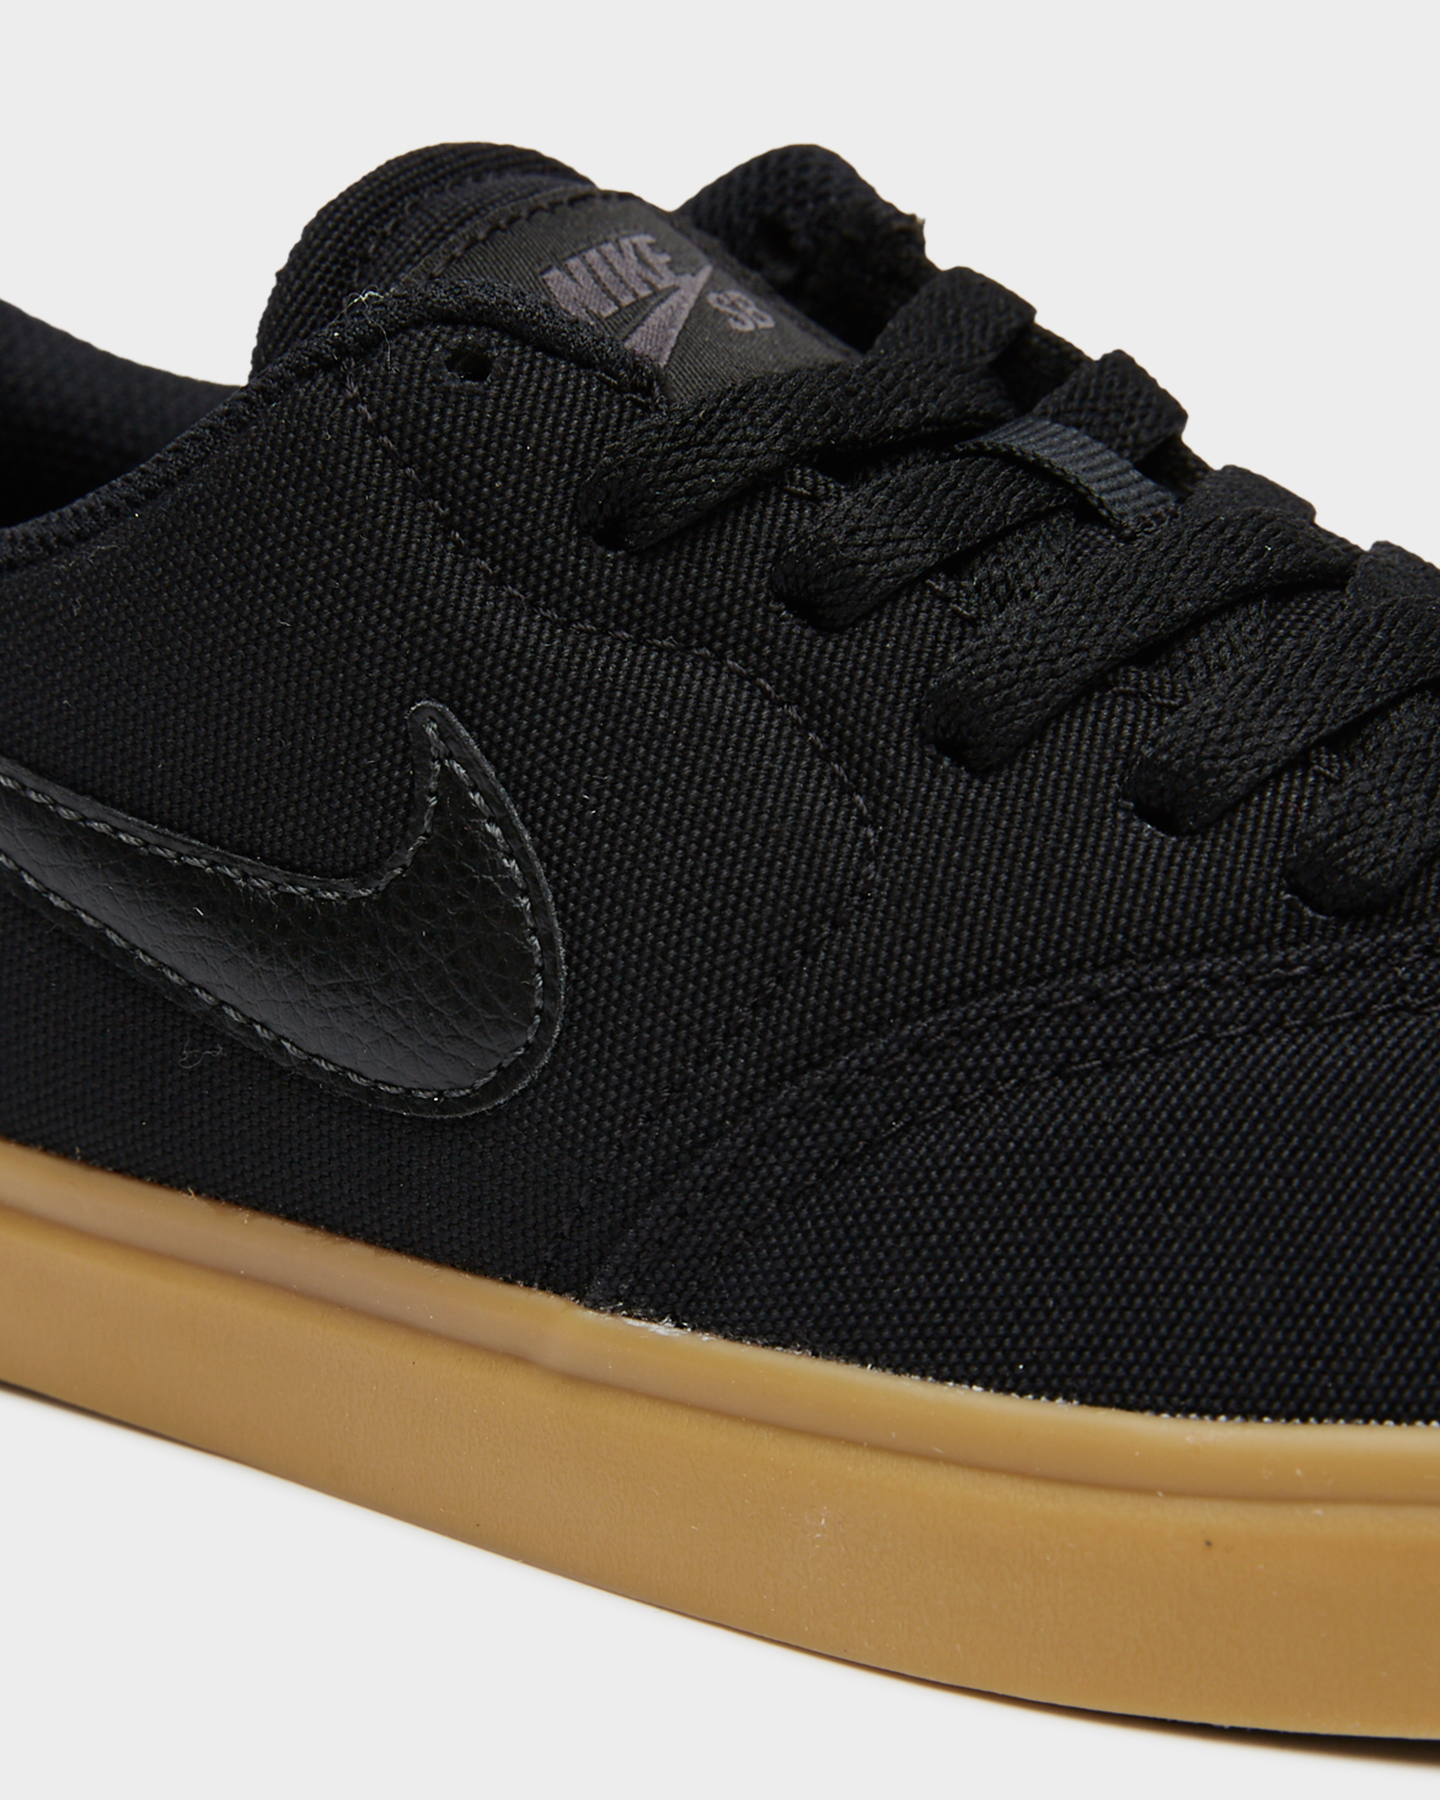 Nike Sb Check Canvas Shoe - Youth - Black Gum | SurfStitch